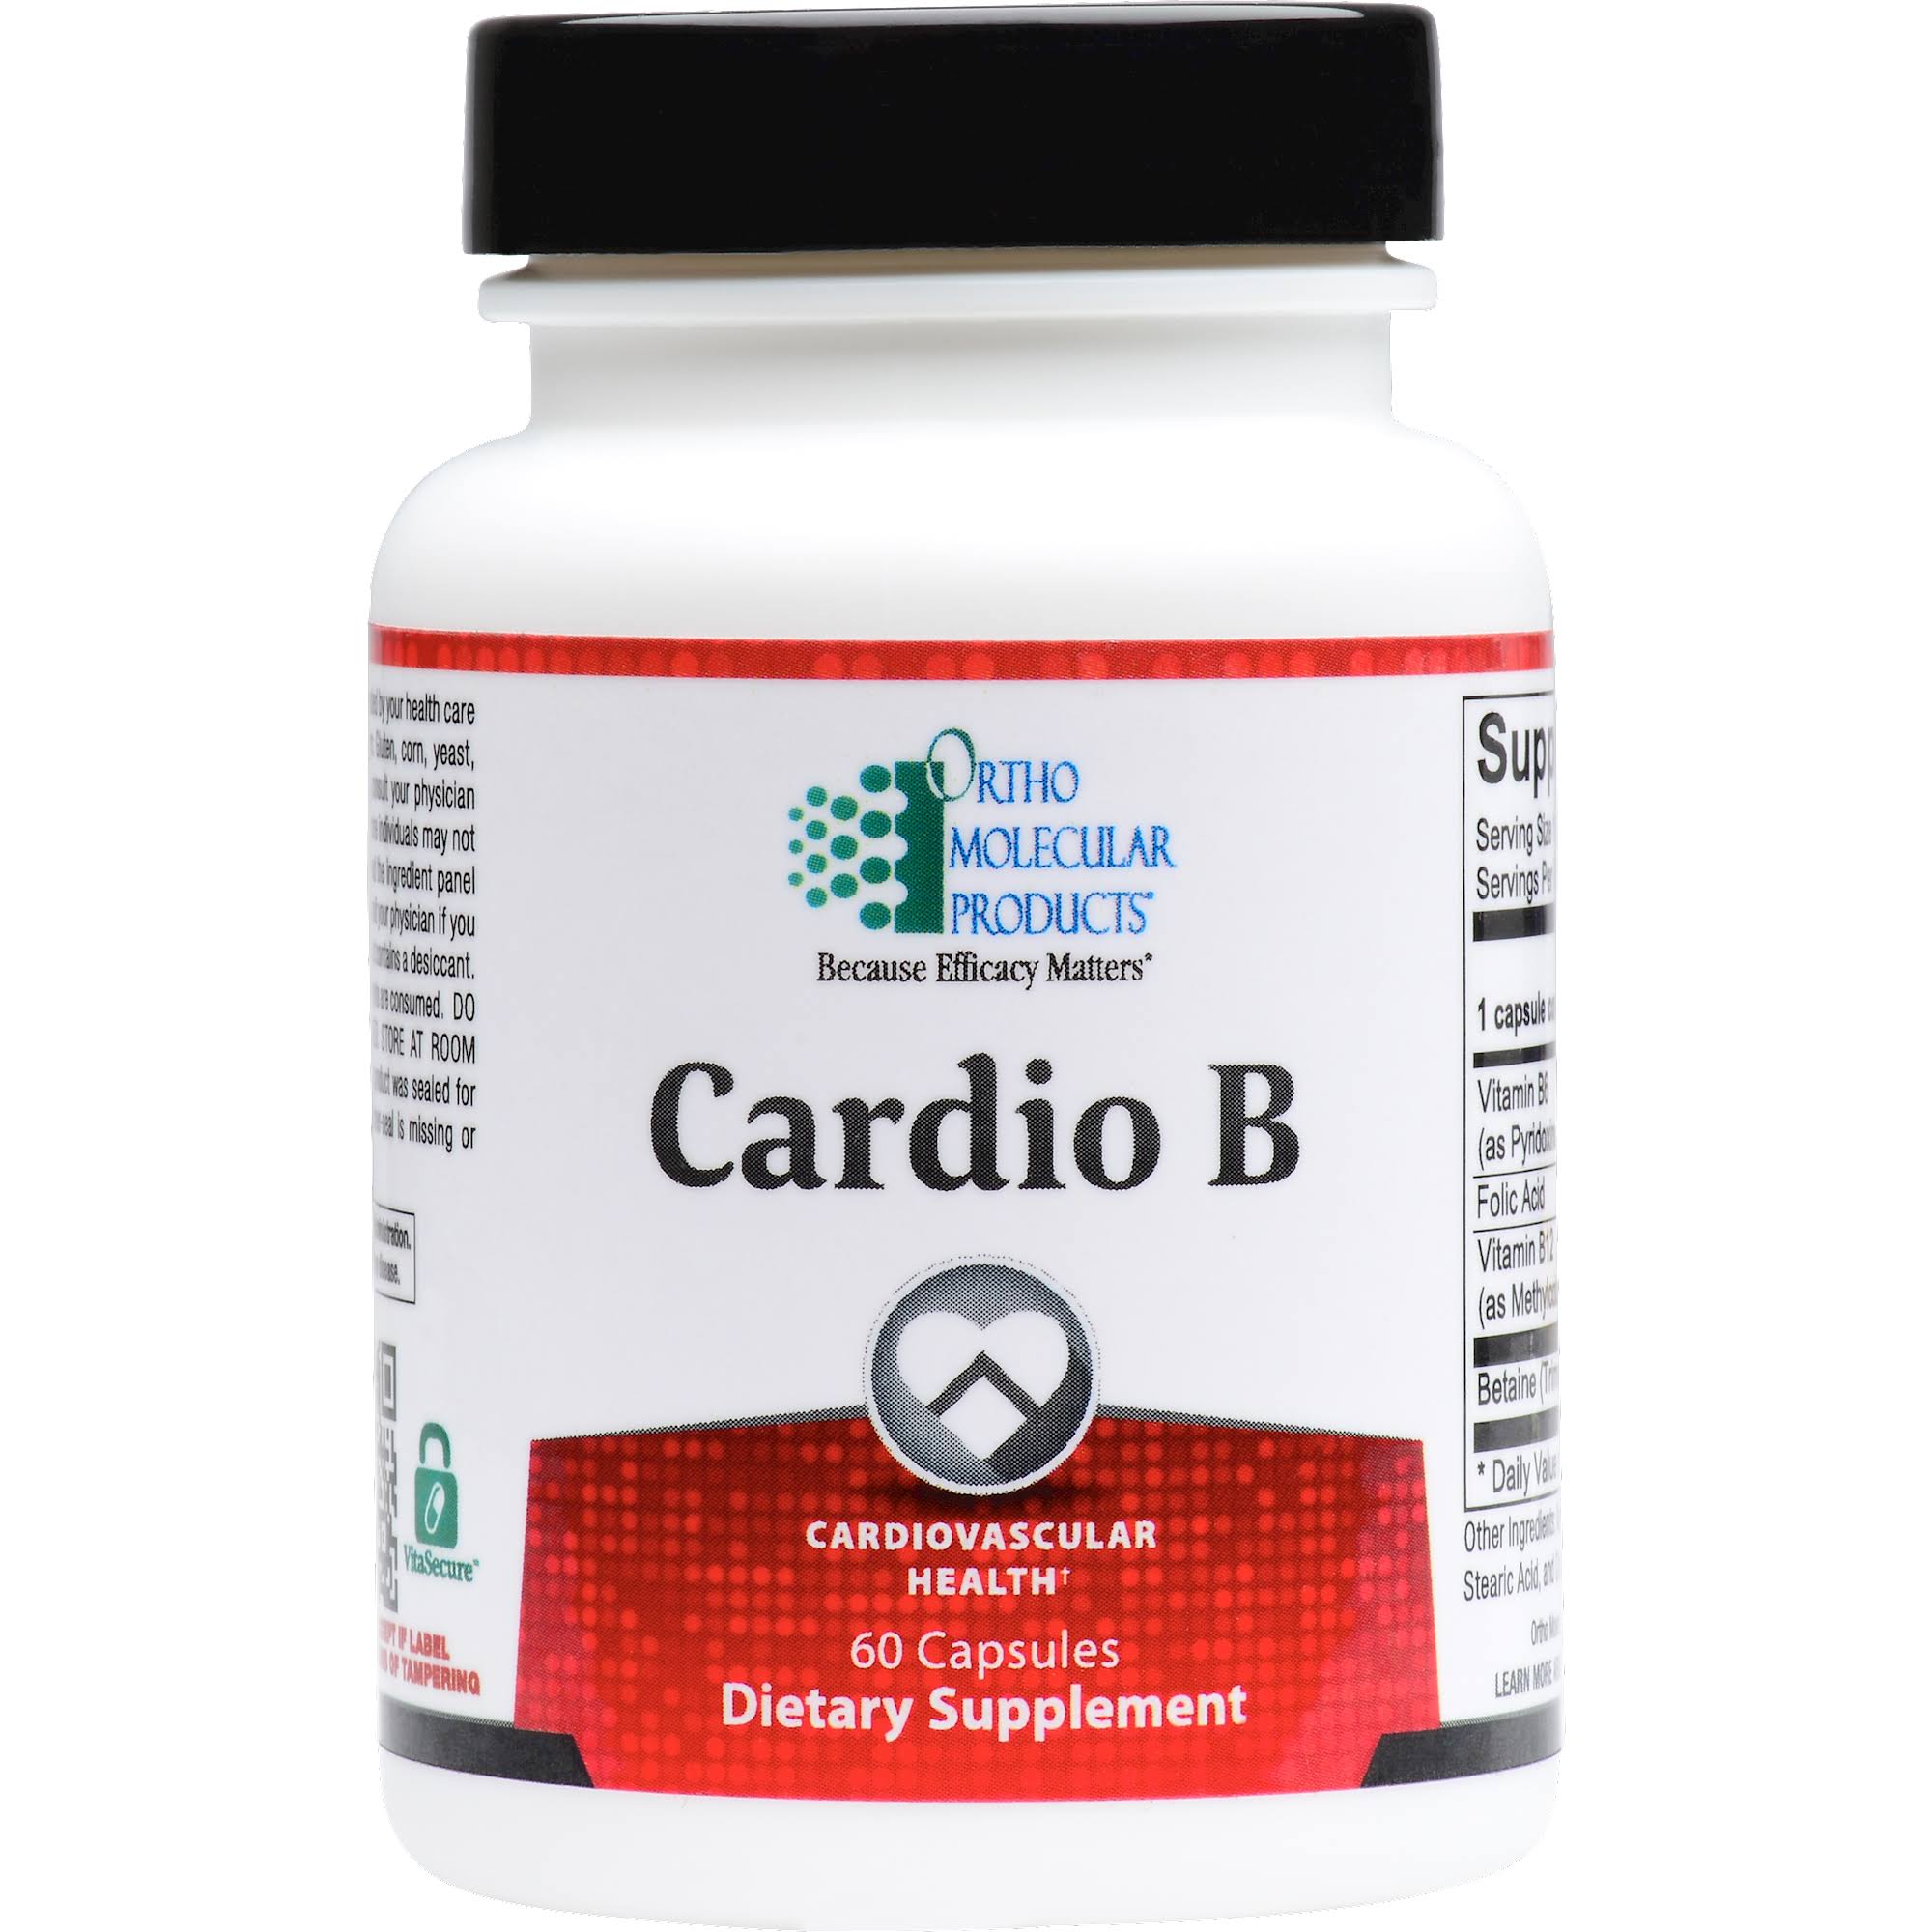 Ortho Molecular Products Cardio B Capsules - x120